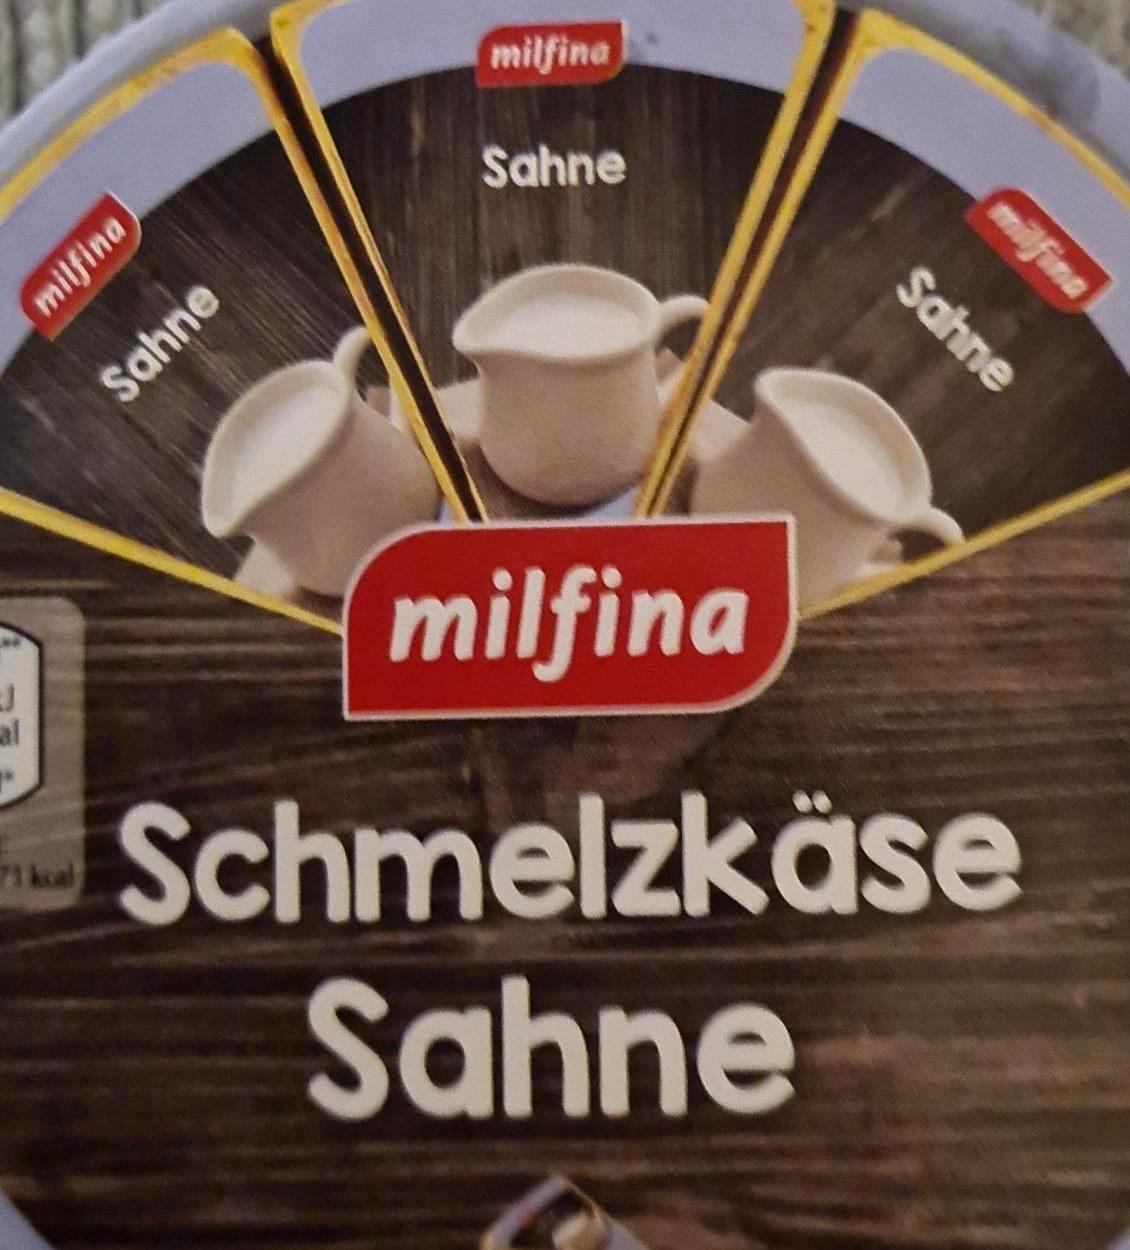 Képek - Schmelzkäse Sahne Milfina